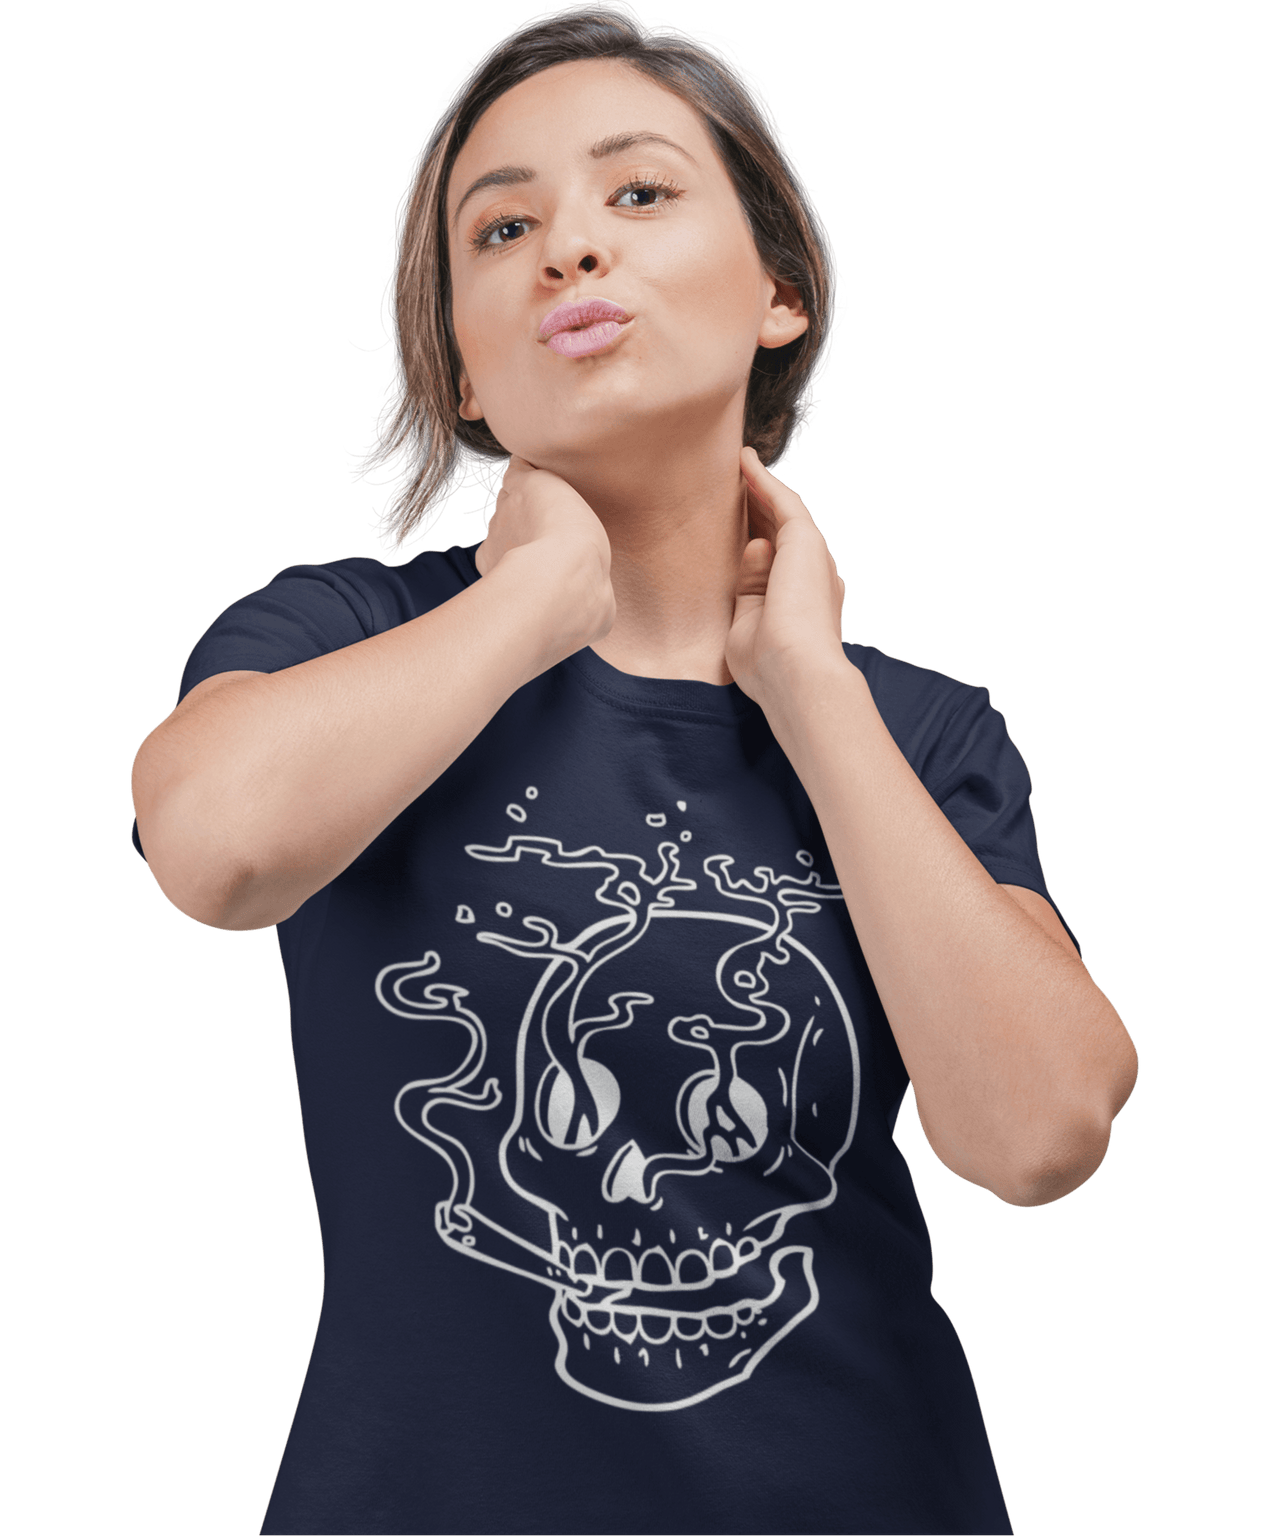 Smoking Skull Tattoo Design Adult Unisex Unisex T-Shirt For Men And Women 8Ball